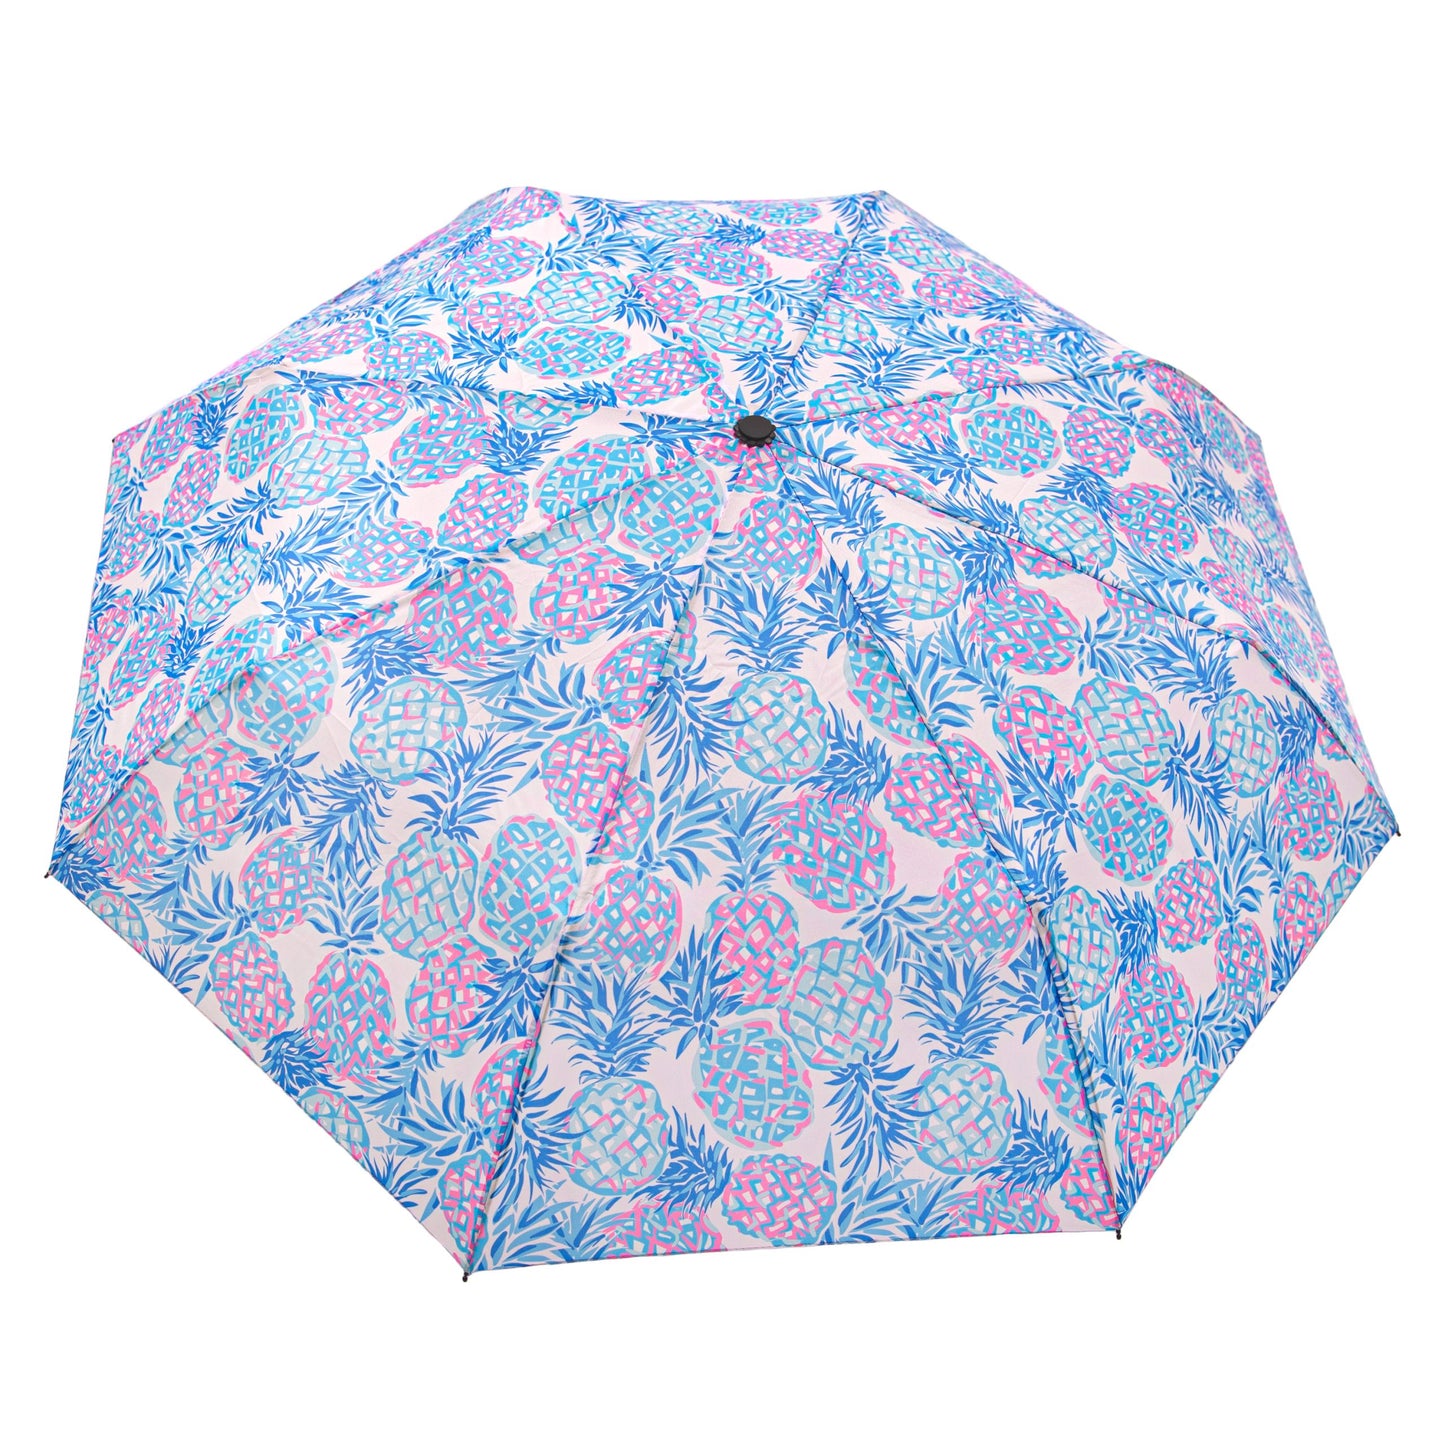 Travel Size Umbrella